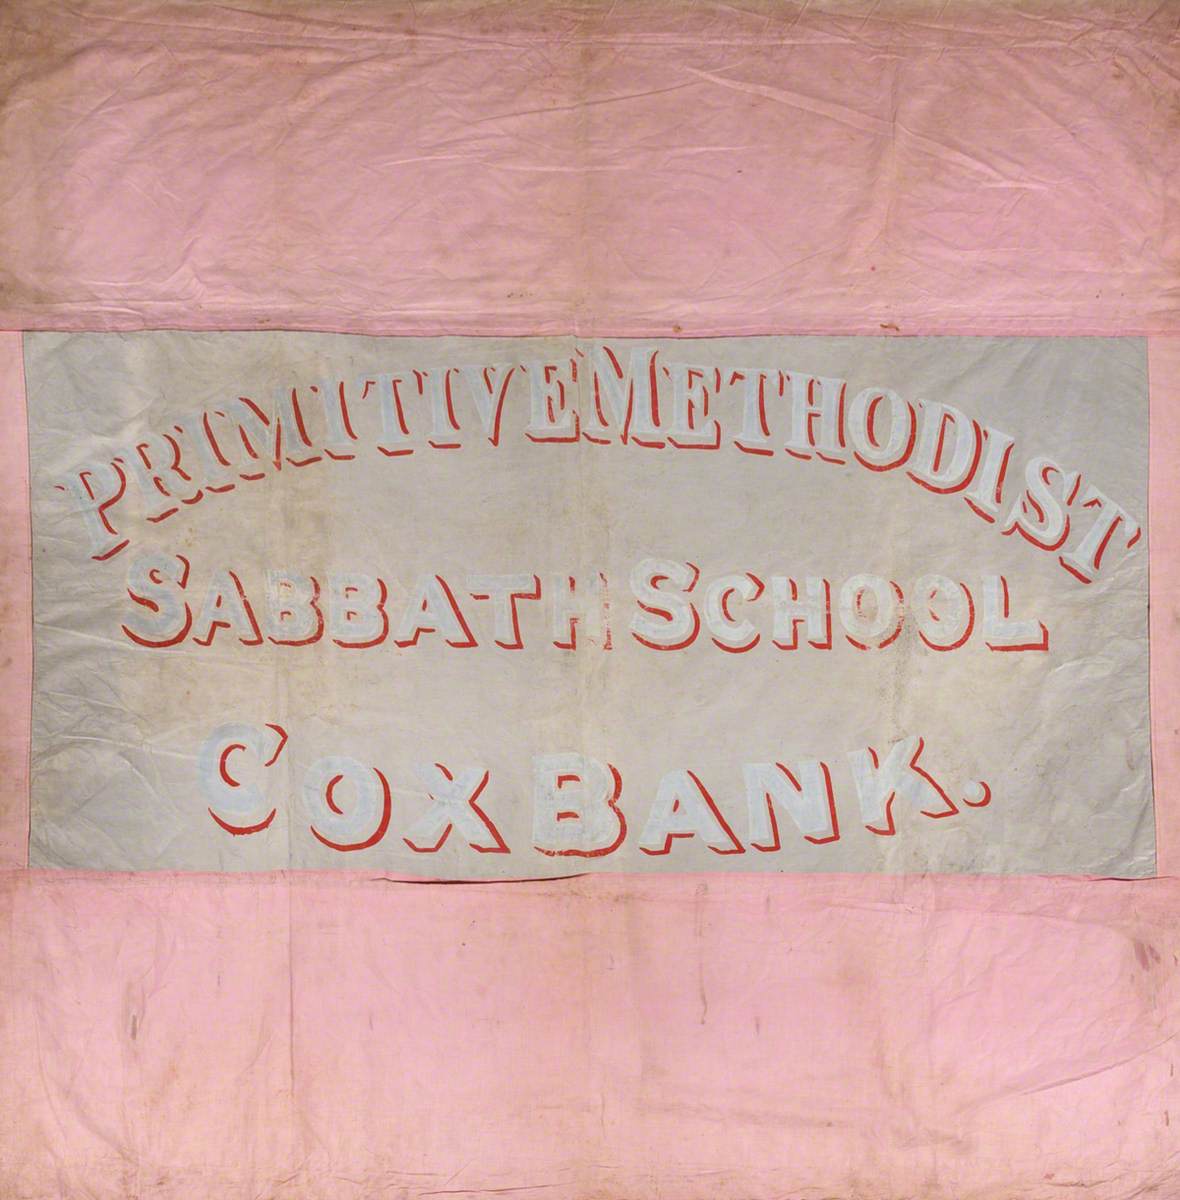 Banner from the Cox Bank Primitive Methodist Sabbath School